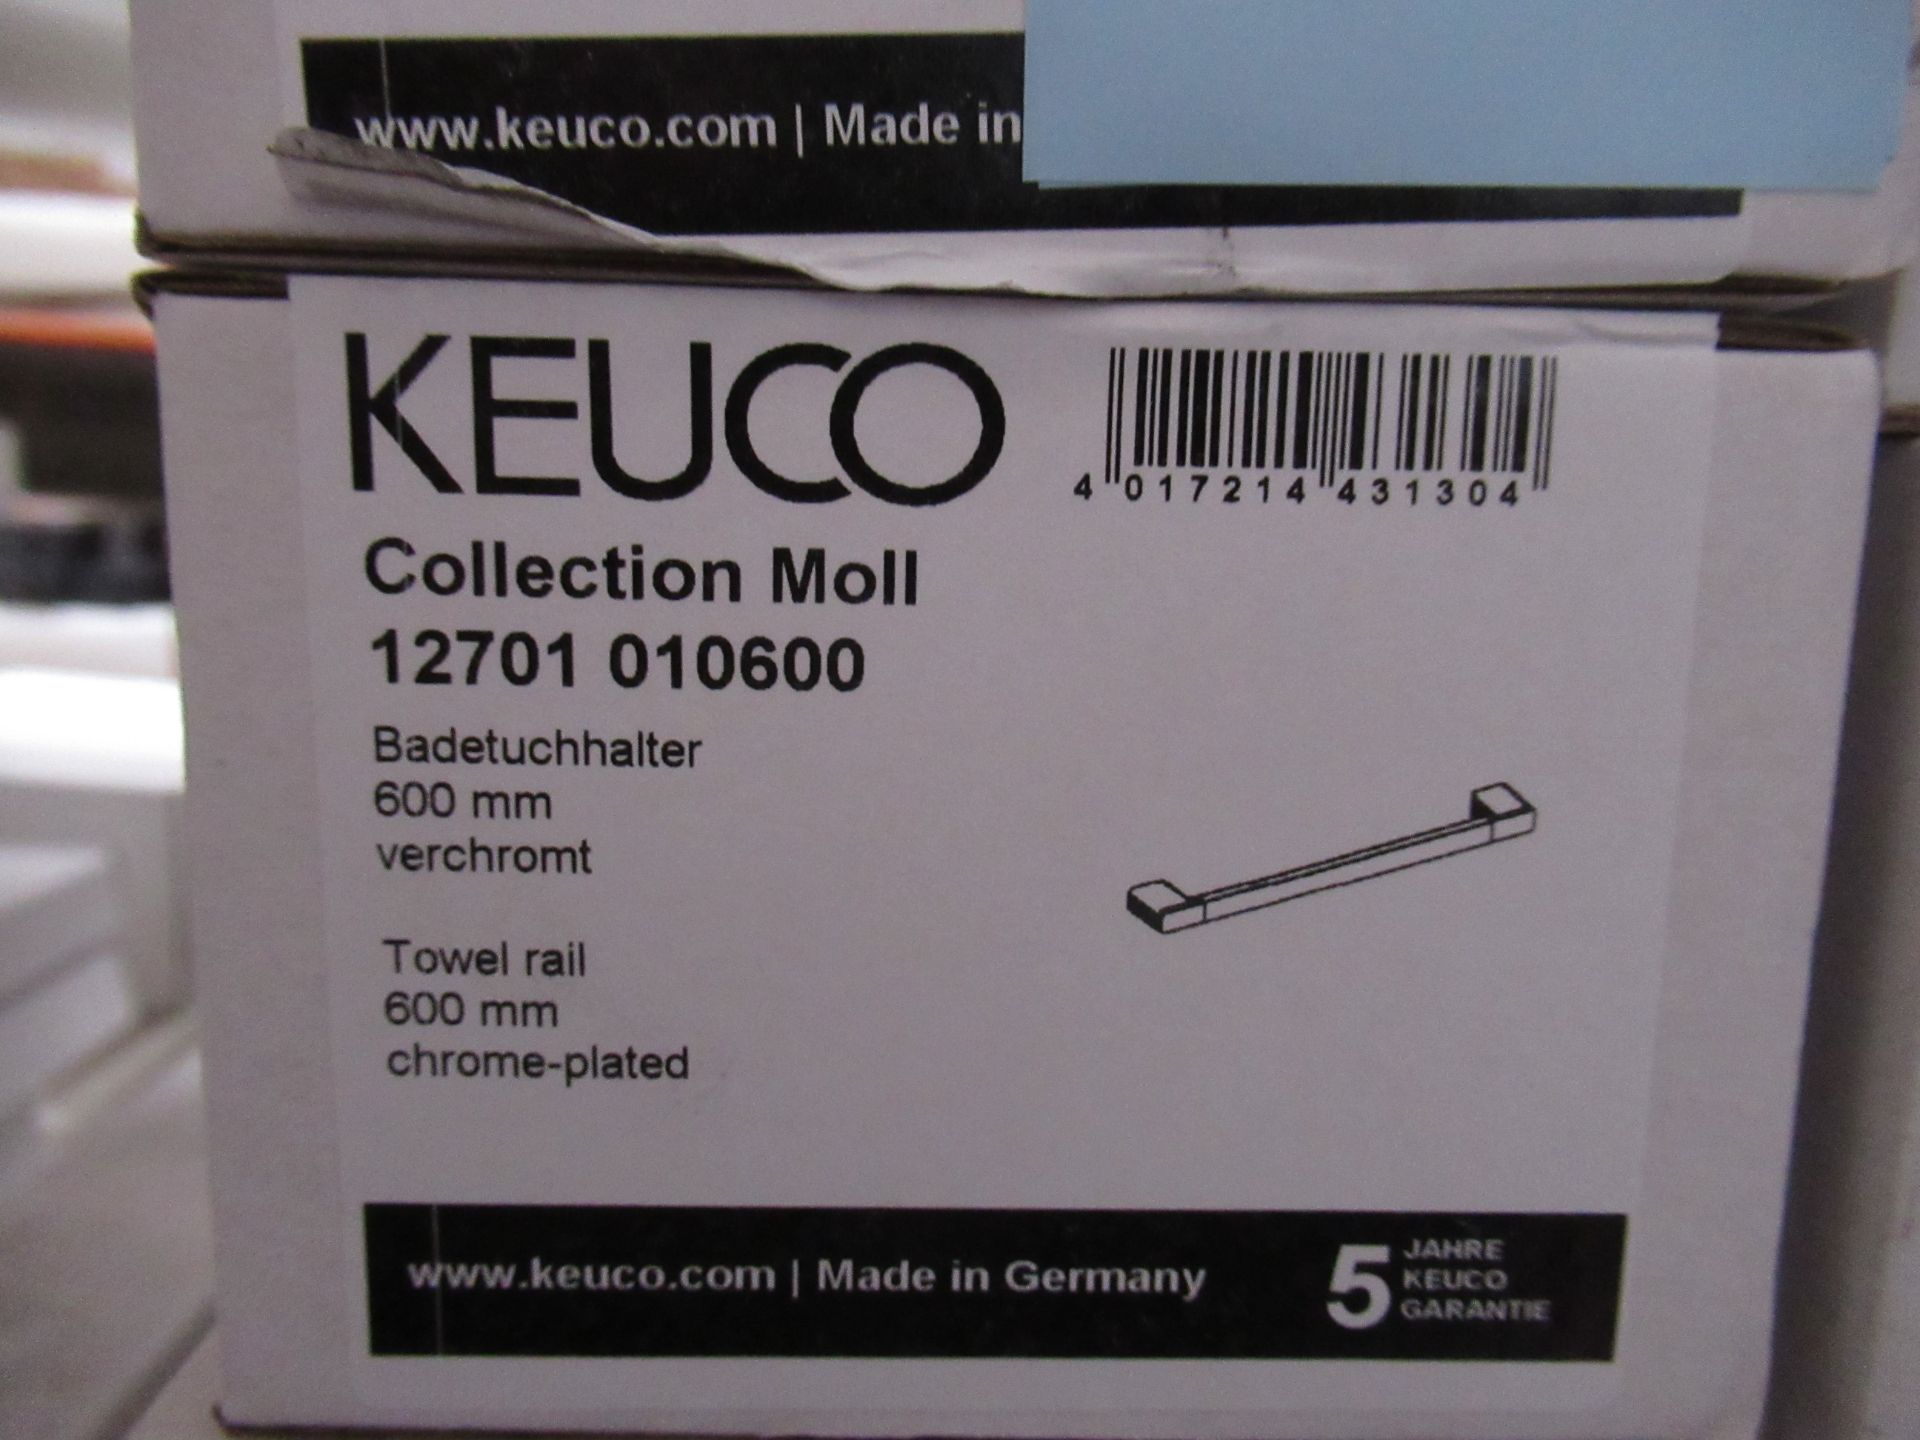 3 x Keuco Collection Moll Towel Rail Chrome Plated, P/N 12701-010600 - Image 2 of 2